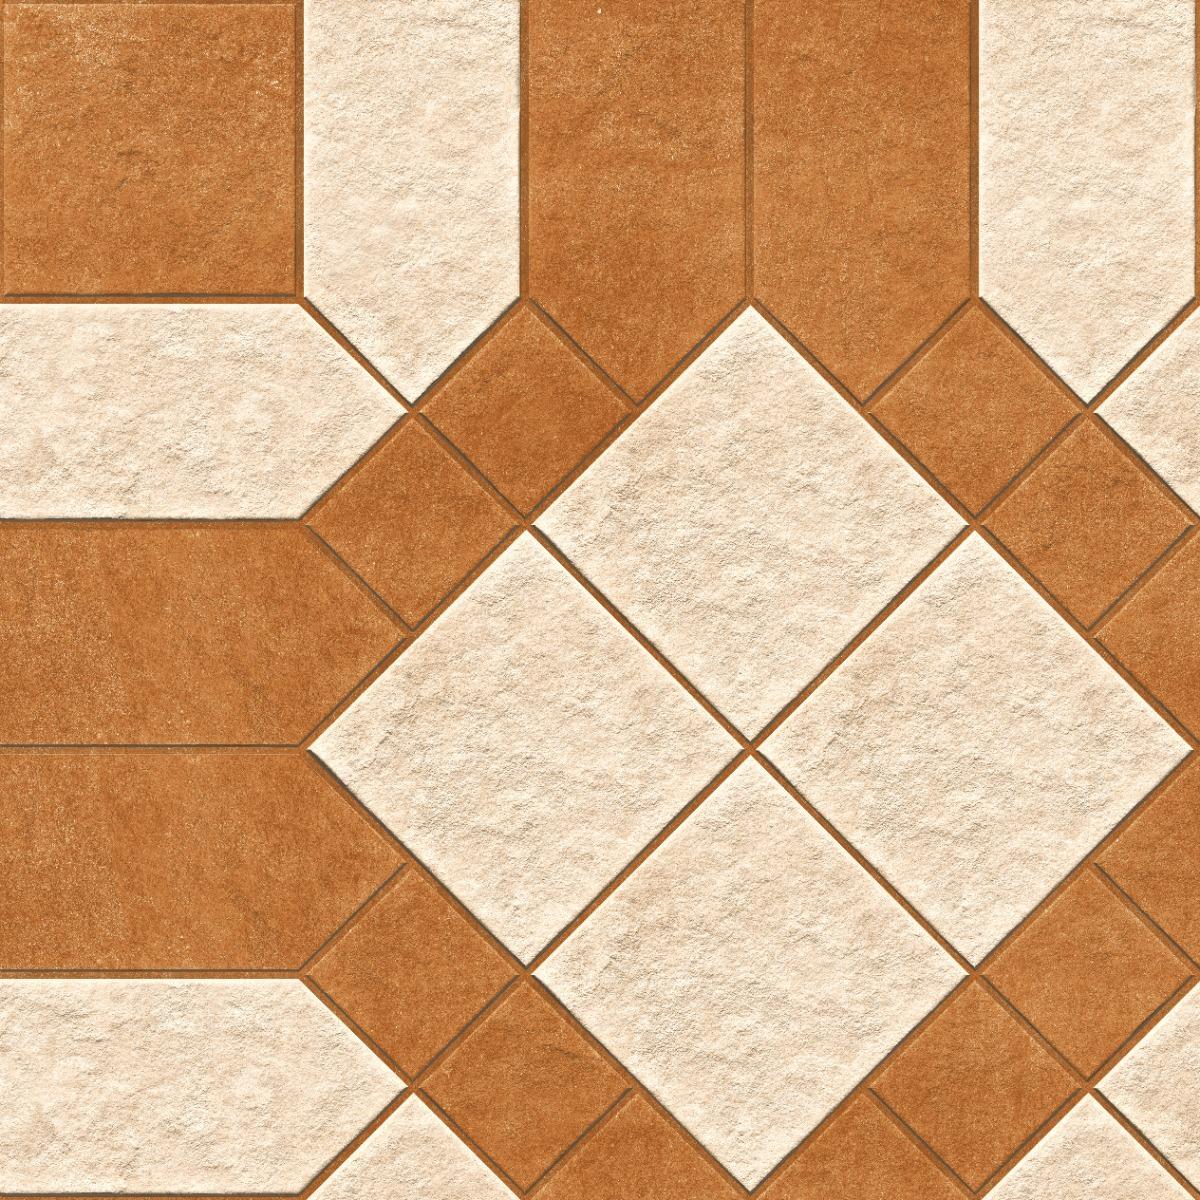 Beige Tiles for Balcony Tiles, Parking Tiles, Terrace Tiles, Pathway Tiles, High Traffic Tiles, Commercial/Office, Outdoor Area